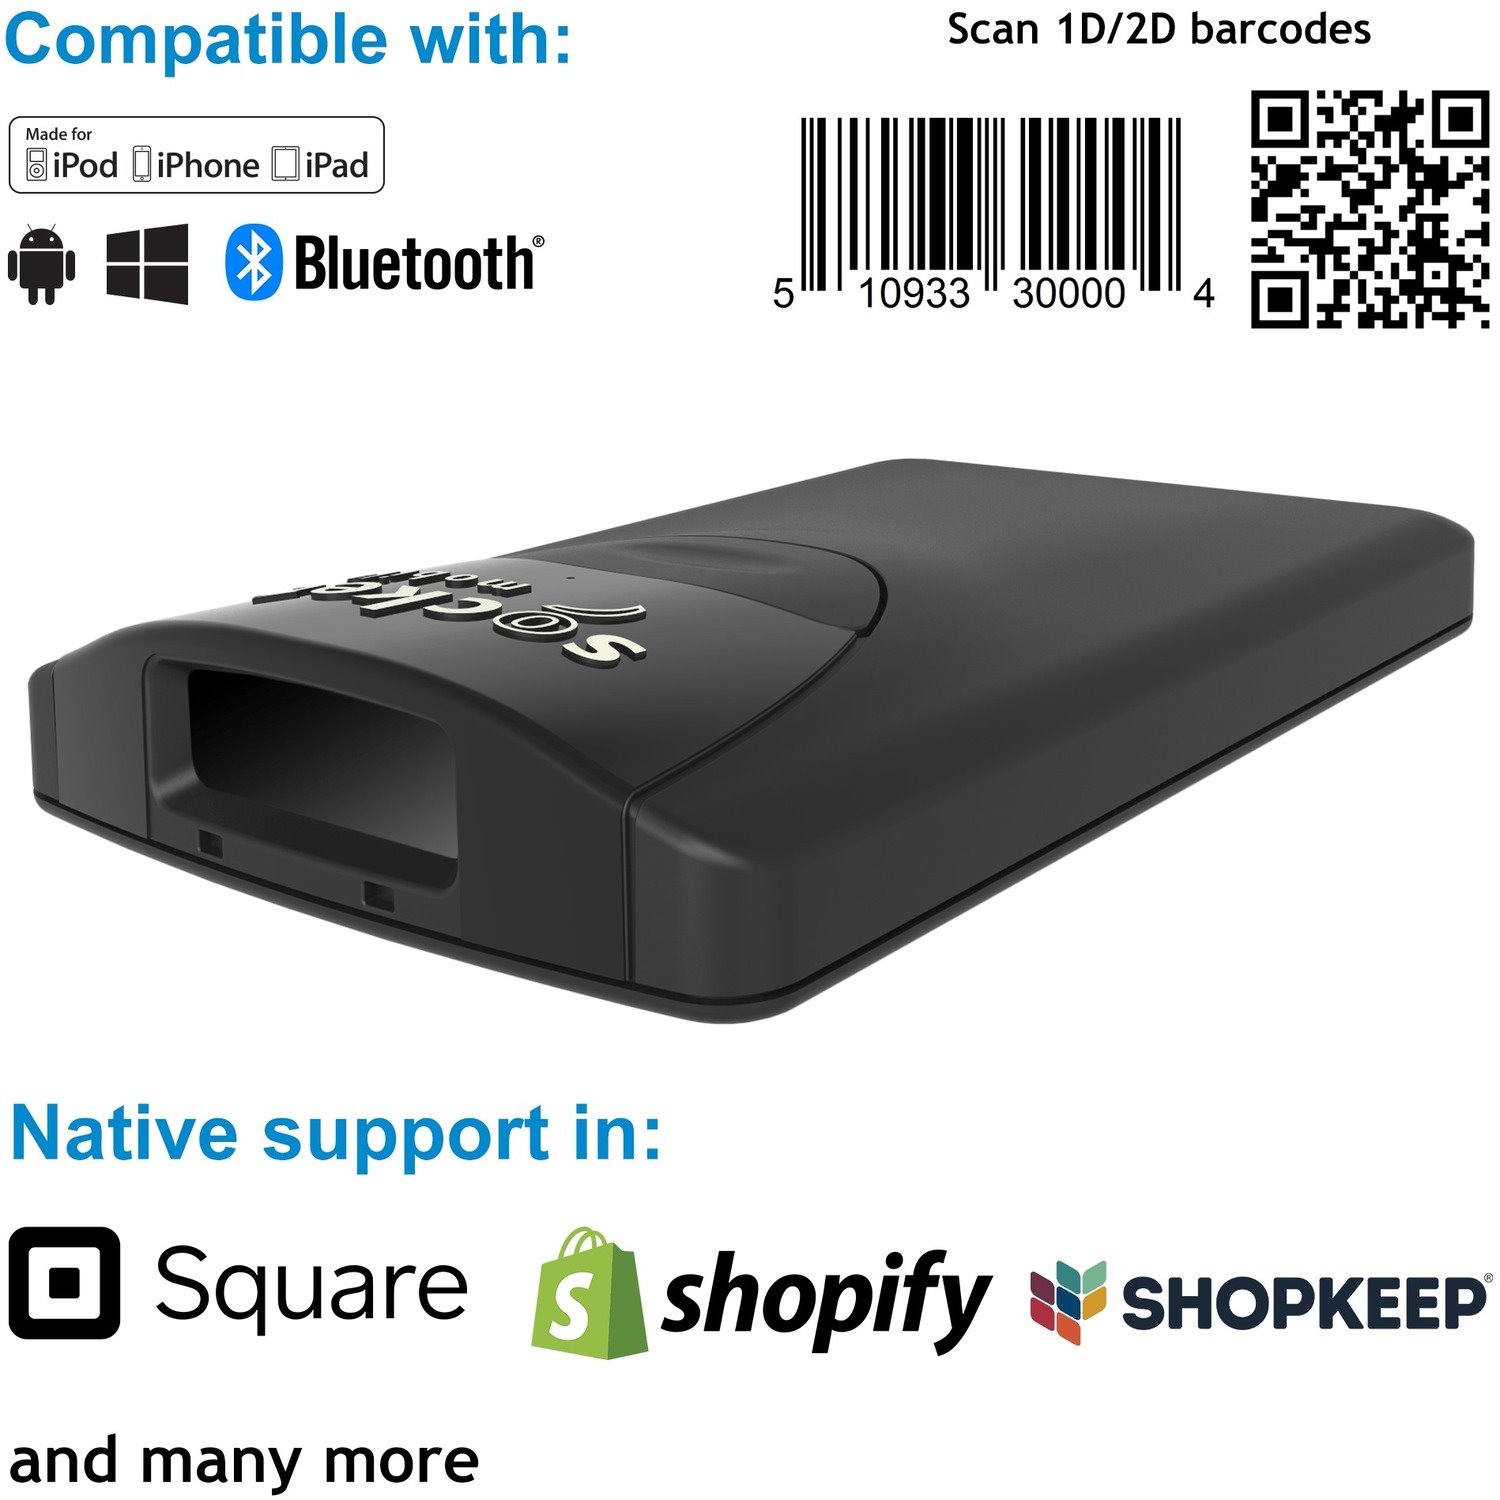 Socket Mobile SocketScan&reg; S860, Ultimate Barcode Scanner, DotCode & Travel ID Reader